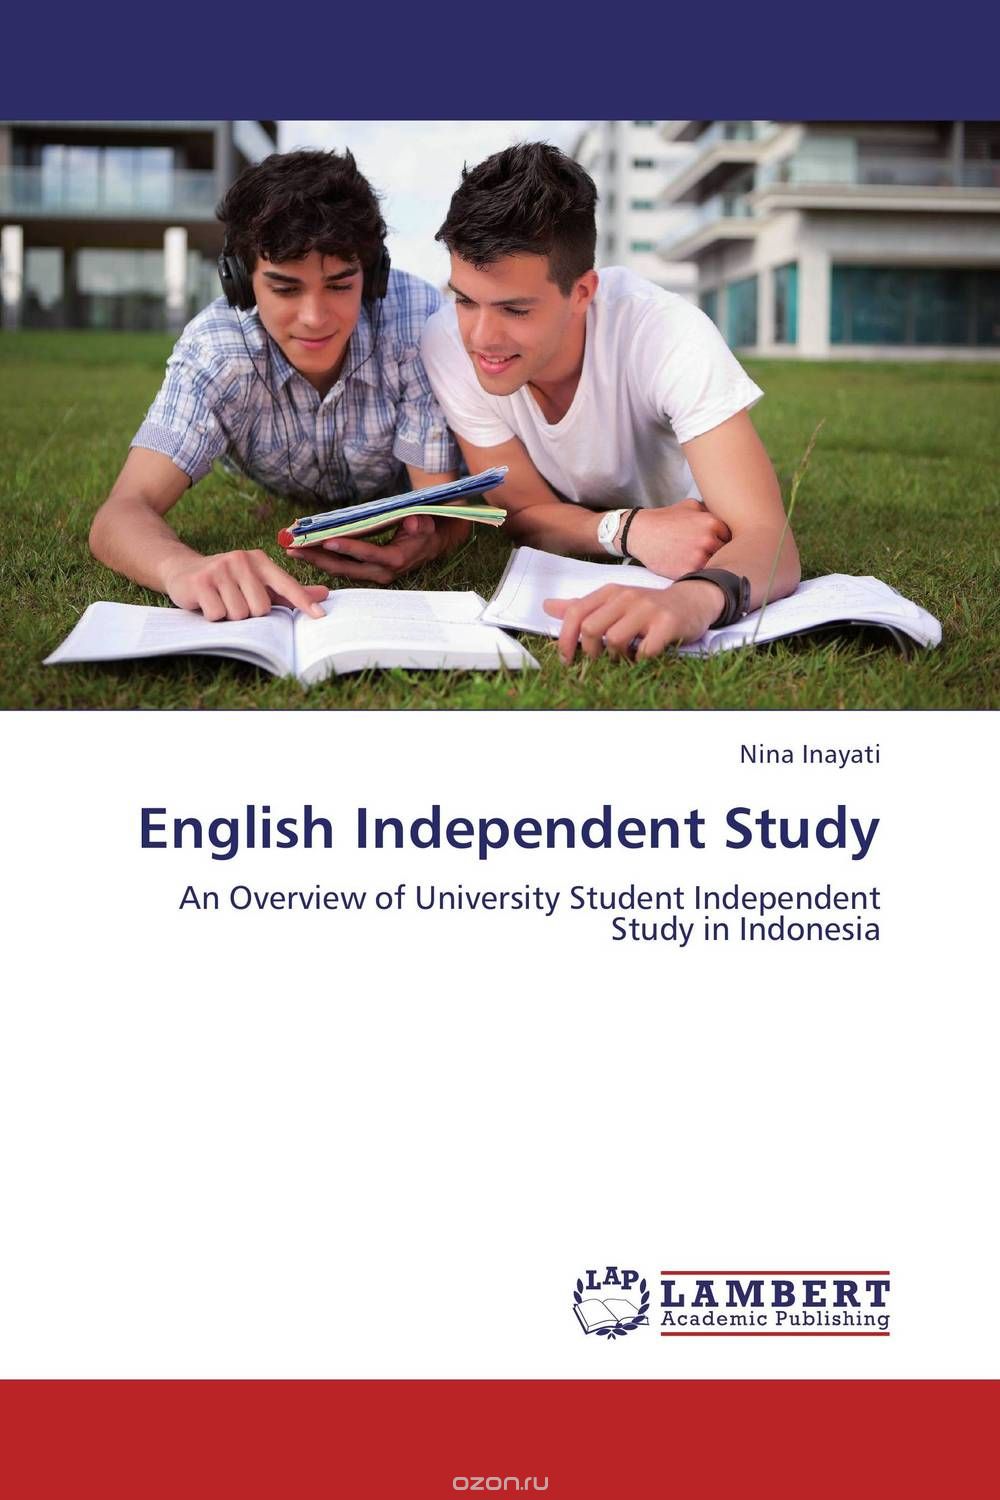 Скачать книгу "English Independent Study"